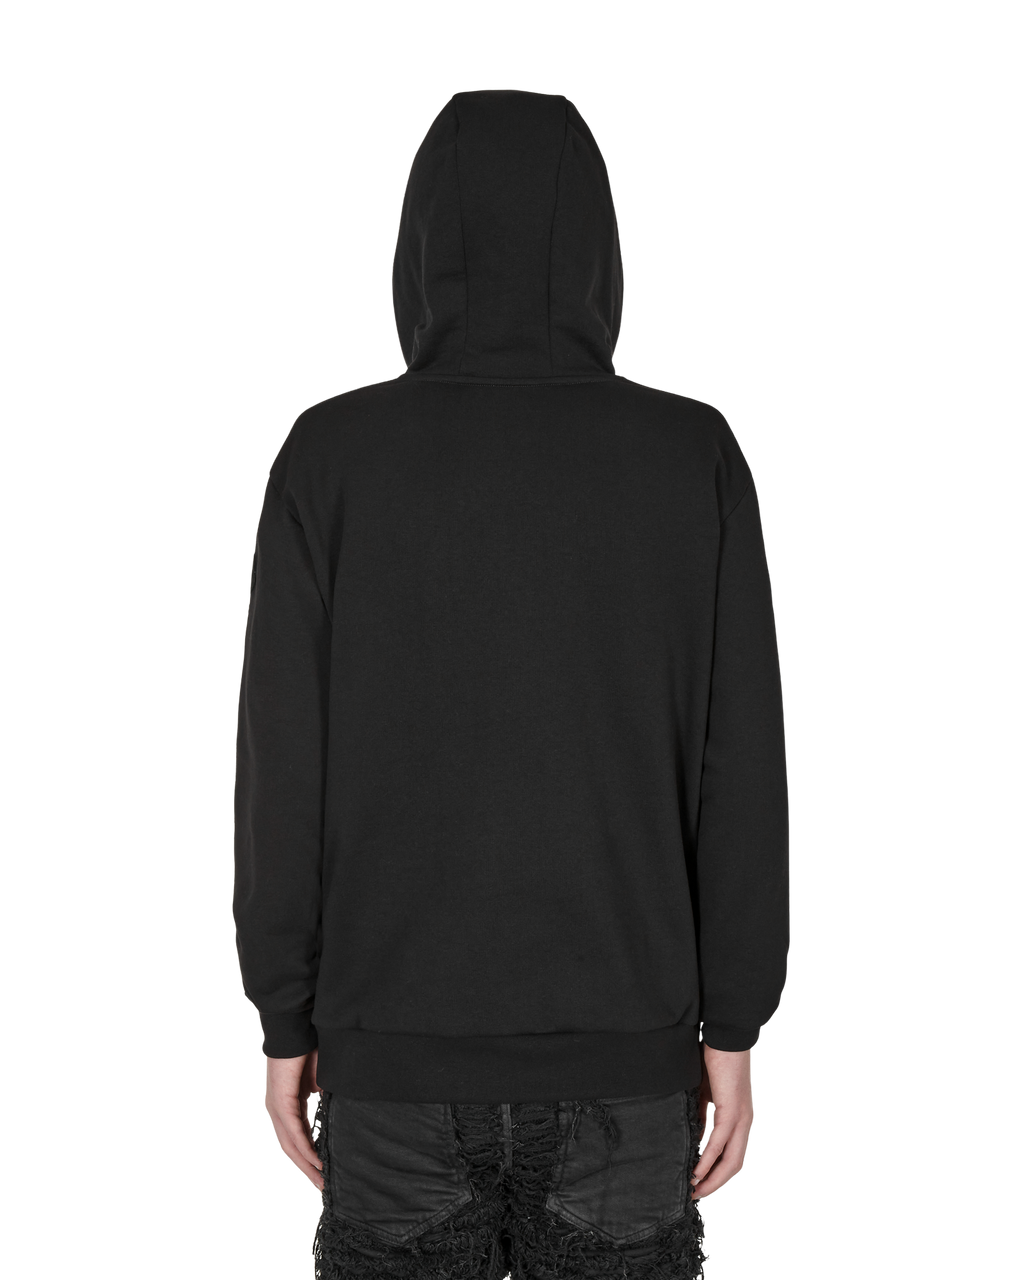 MONCLER GENIUS + 1017 ALYX 9SM printed cotton-blend jersey hoodie